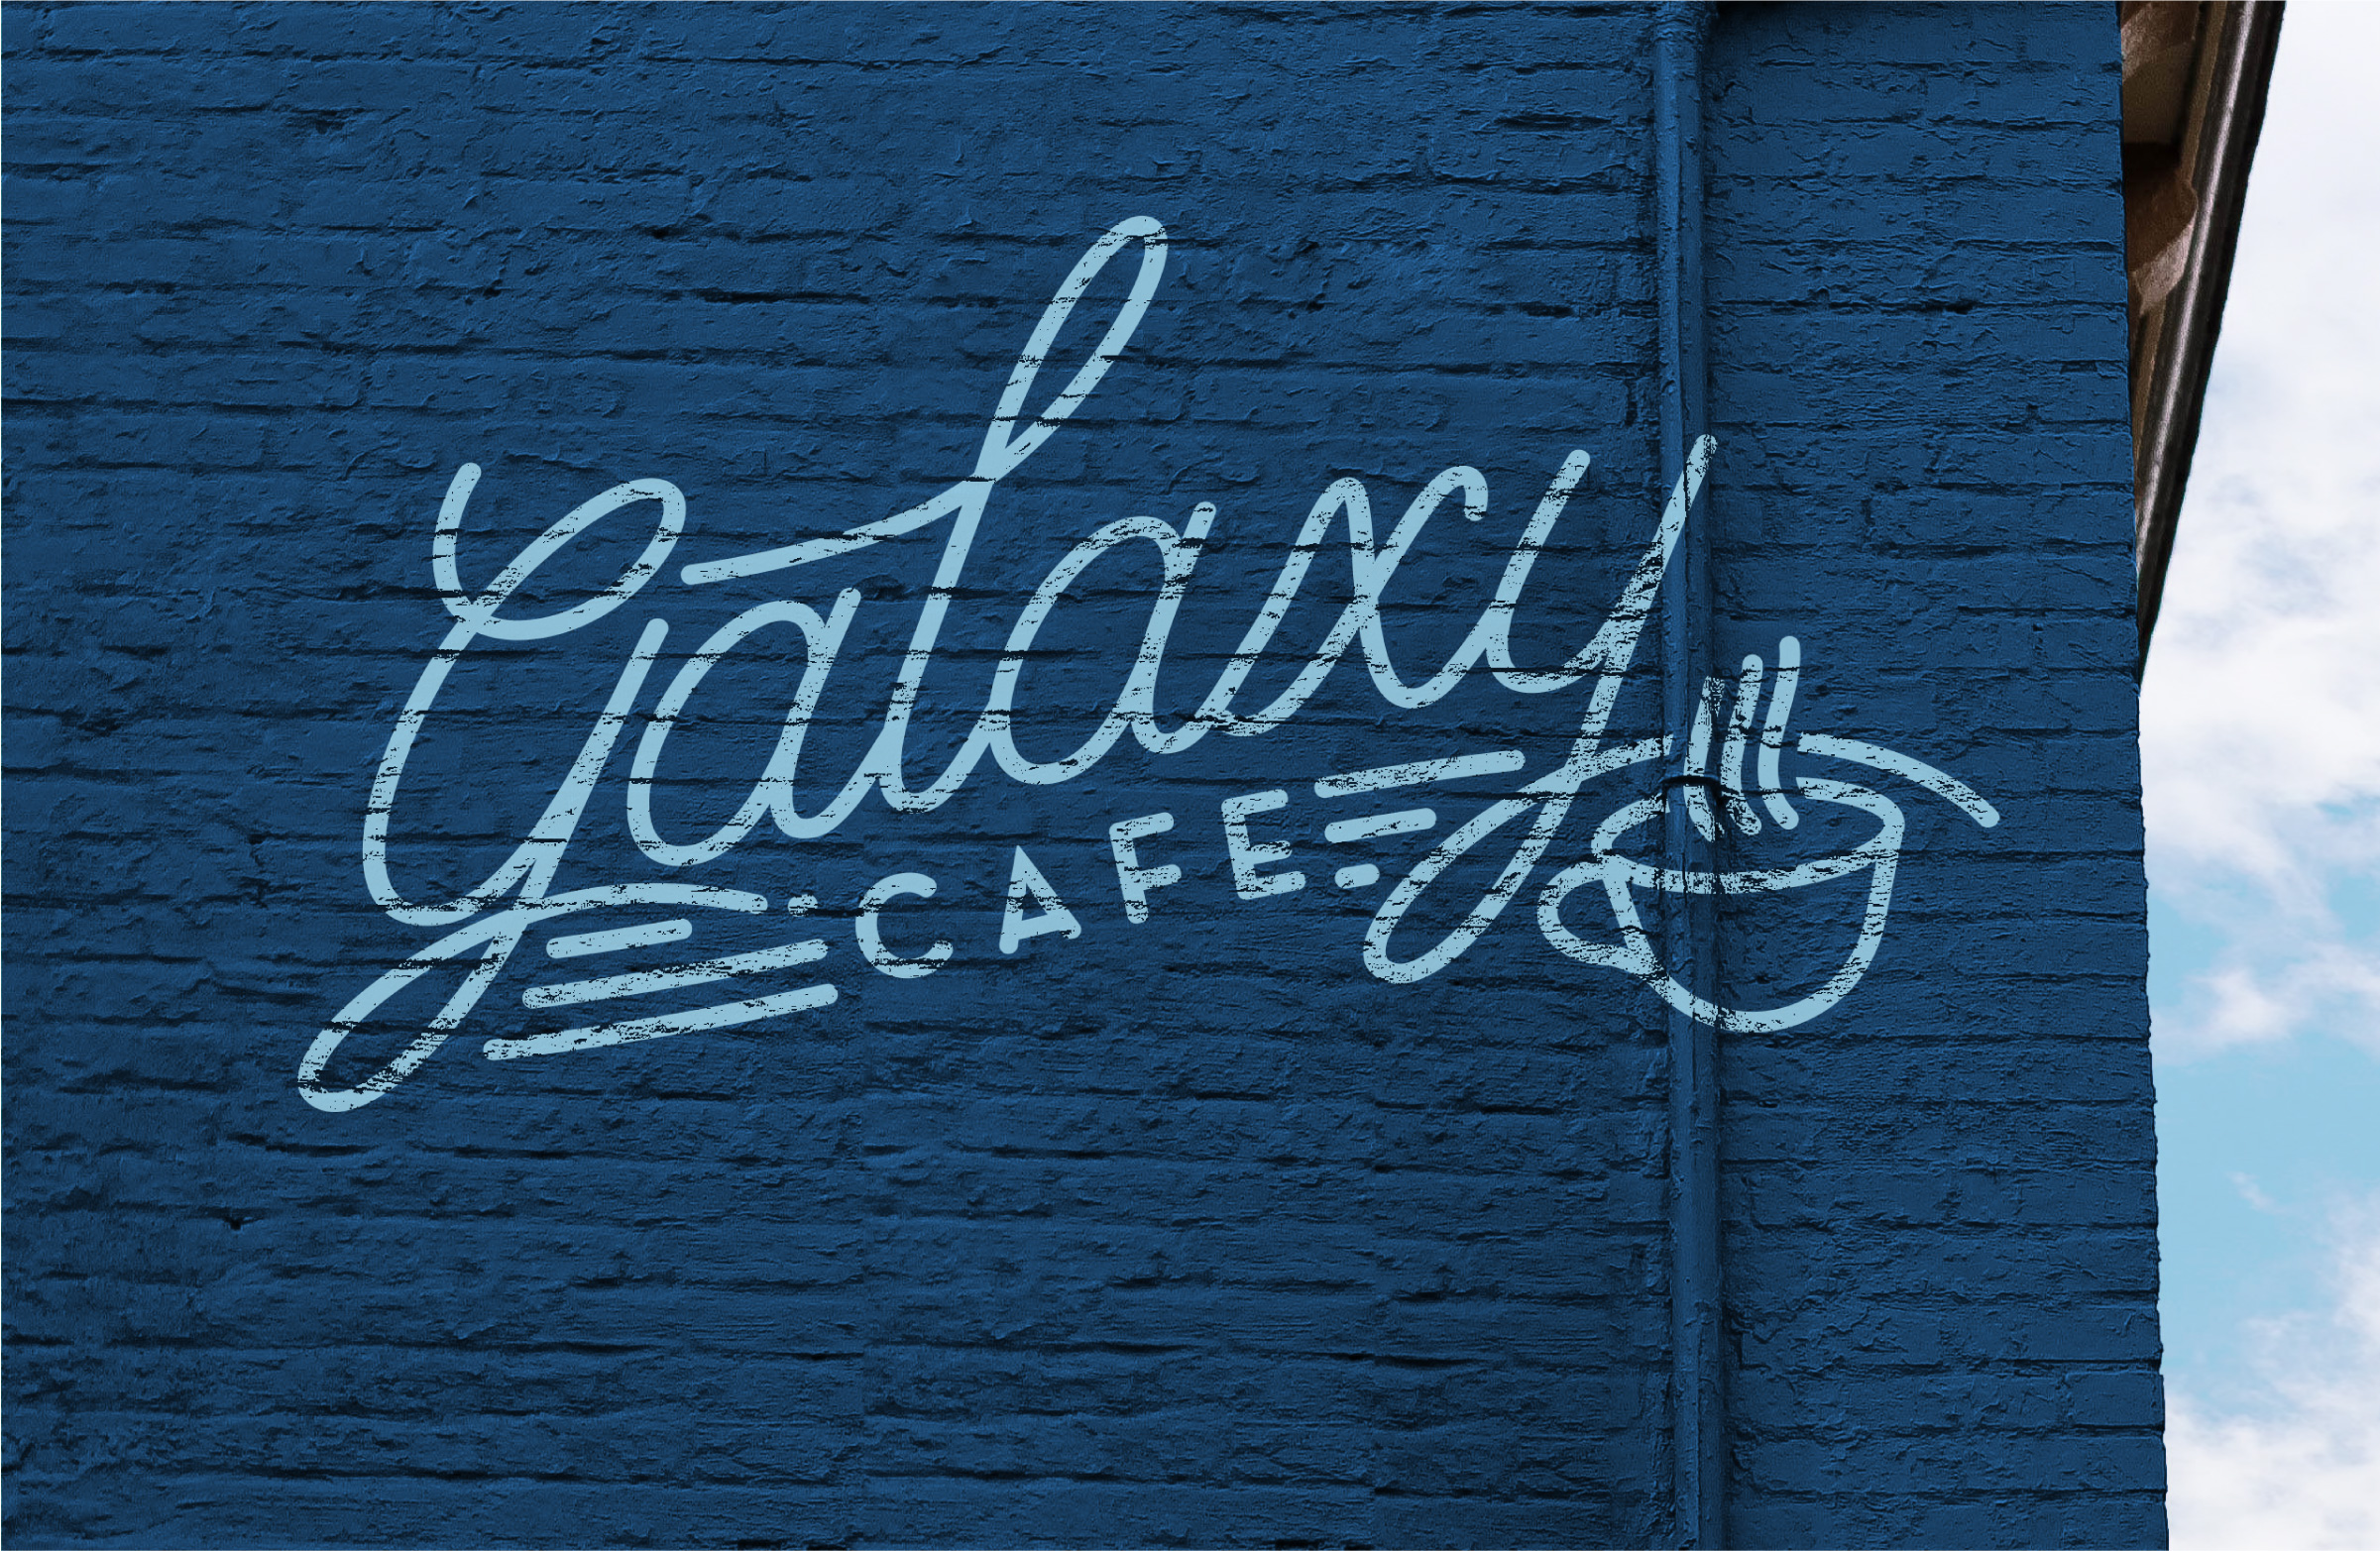 Galaxy Cafe Branding Brick Wall Design Concept Mockup